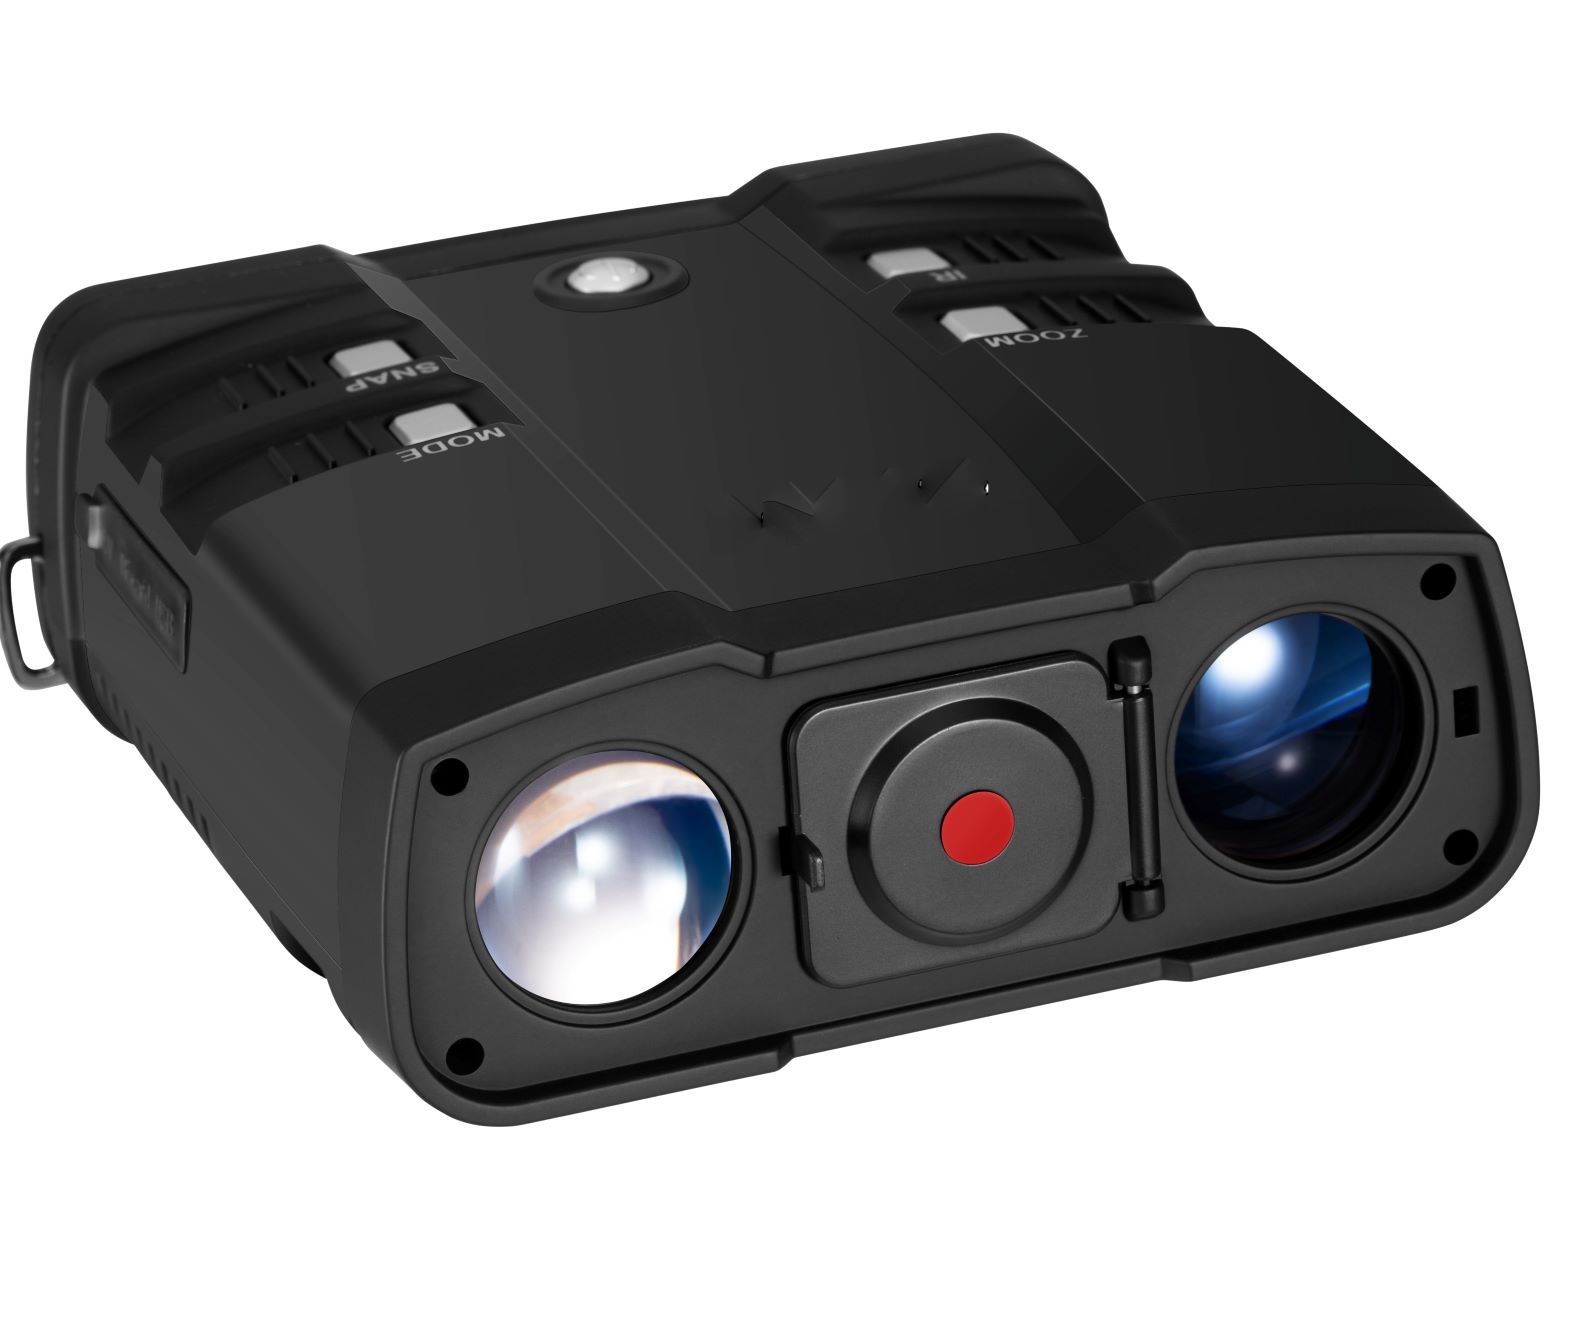 NV-FHD300 IR laser night vision scope